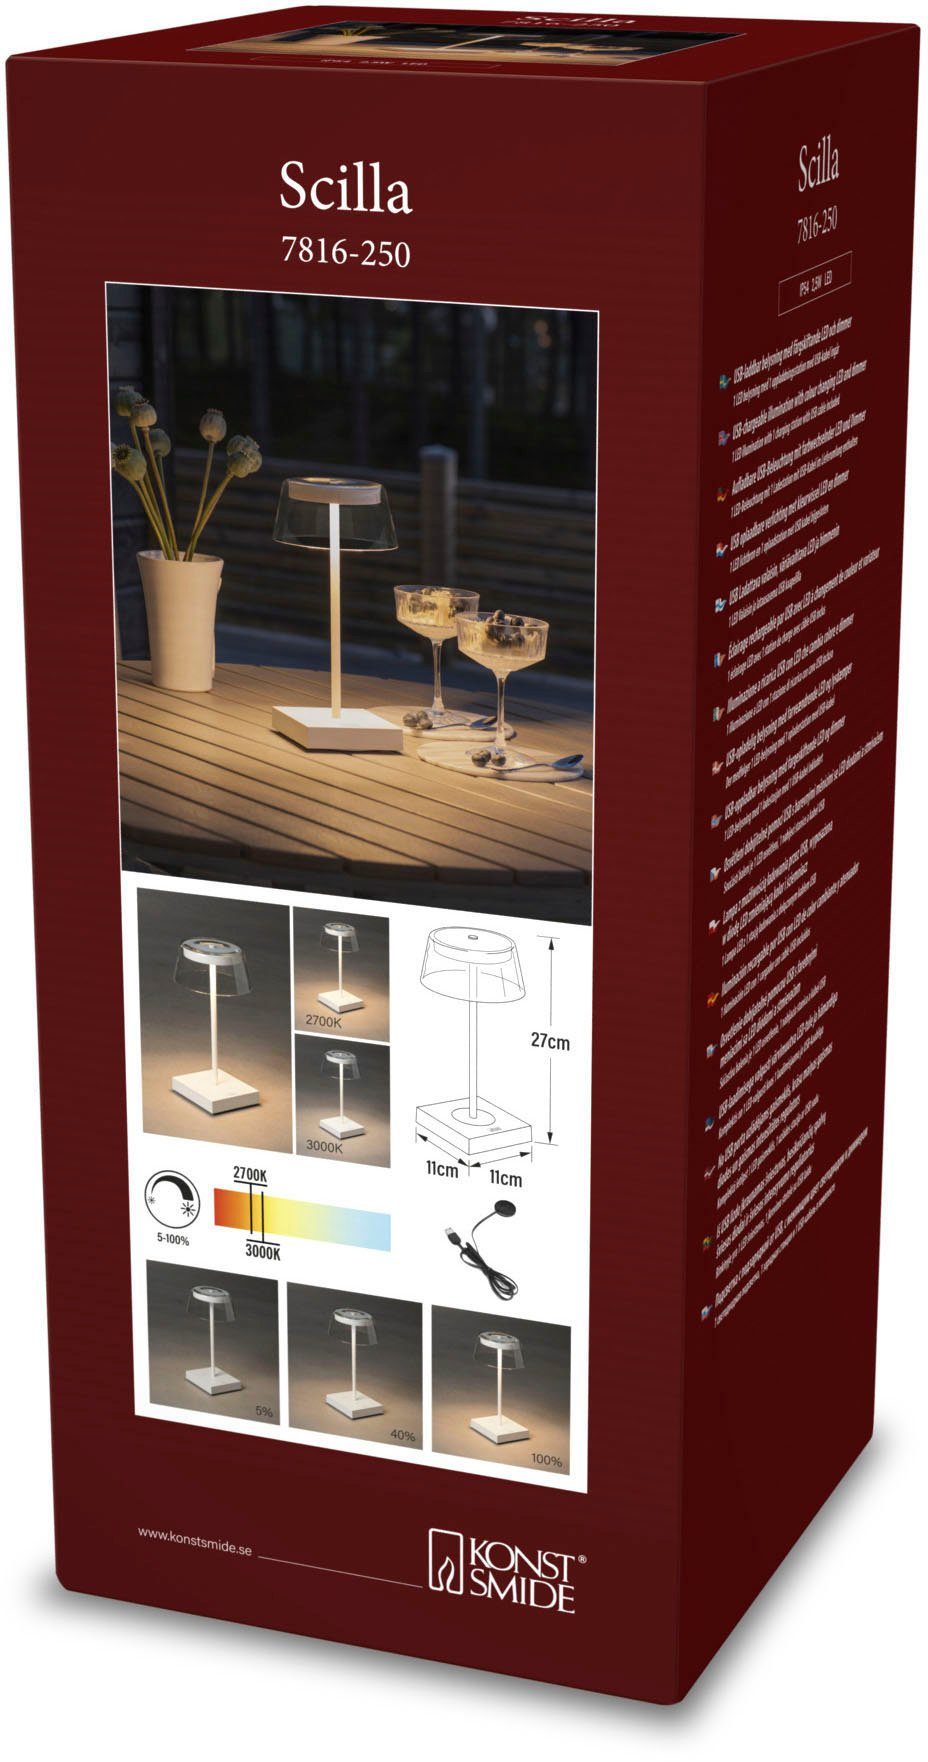 KONSTSMIDE LED Tischleuchte Scilla, LED weiss, LED Warmweiß, USB-Tischleuchte dimmbar Scilla Farbtemperatur, integriert, fest